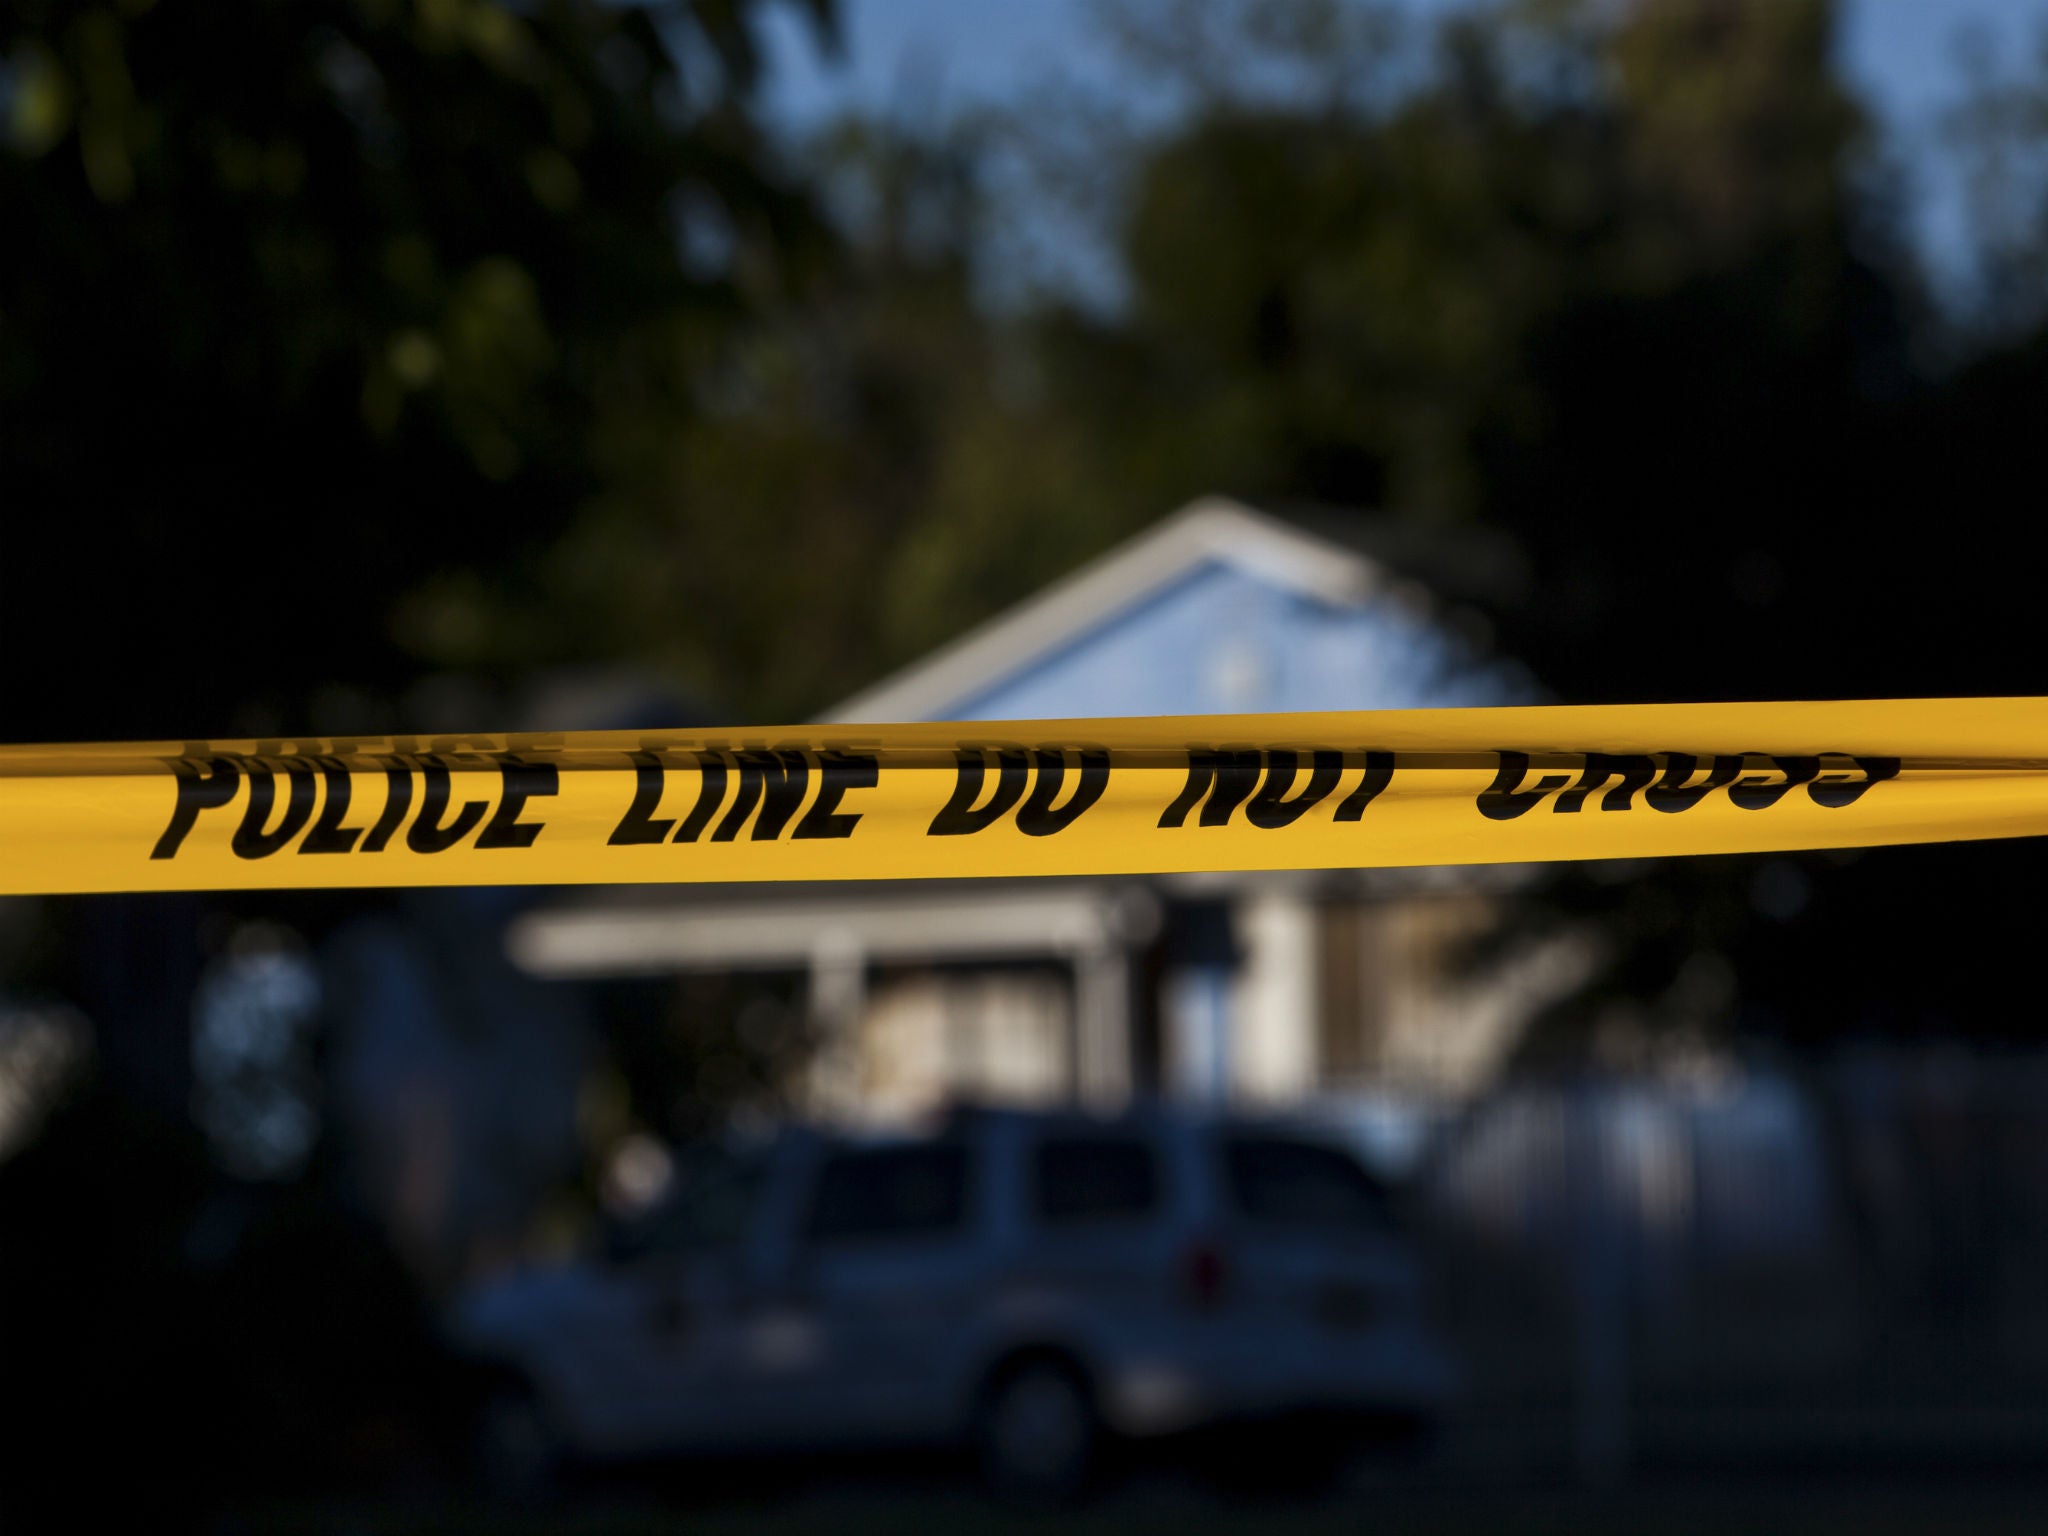 Police tape marks the scene of a shooting in Sacramento, California